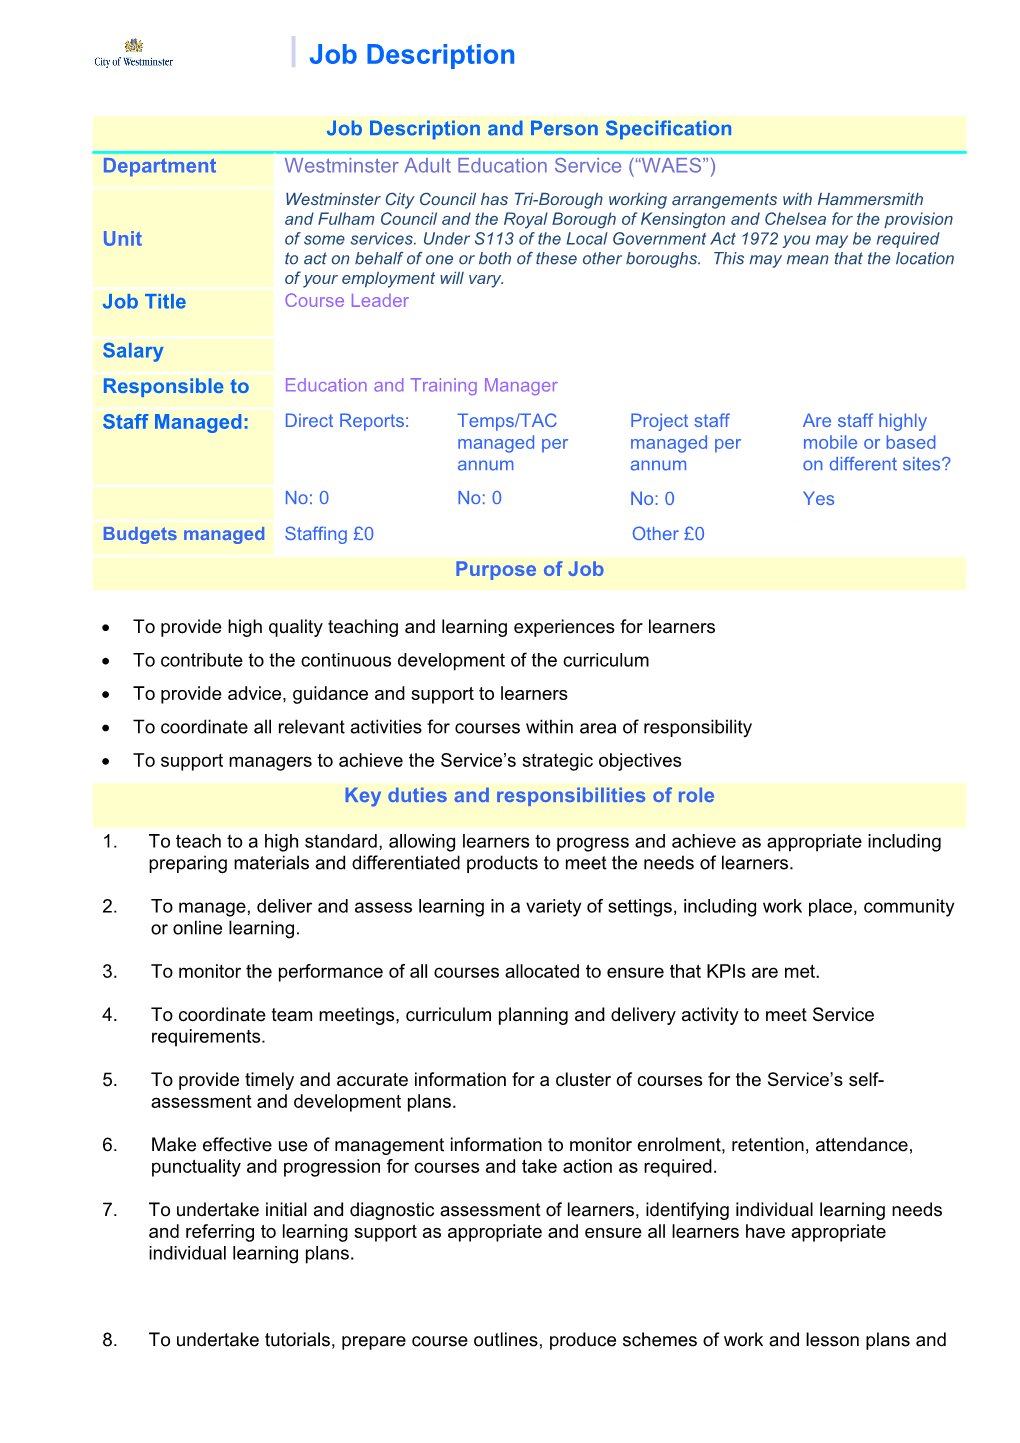 Job Description and Person Specification s1